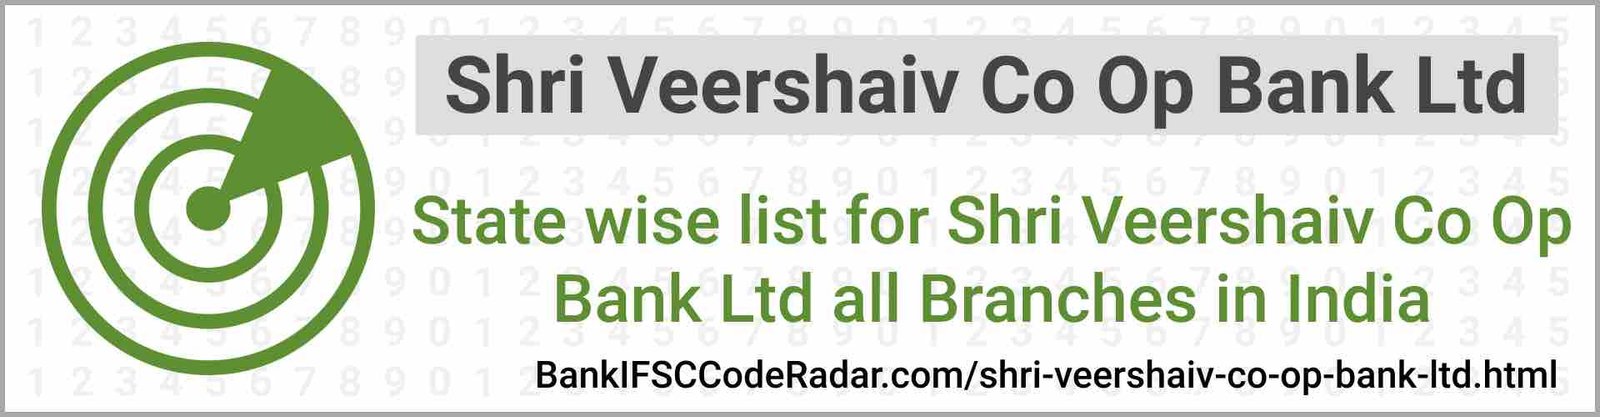 Shri Veershaiv Co Op Bank Ltd All Branches India